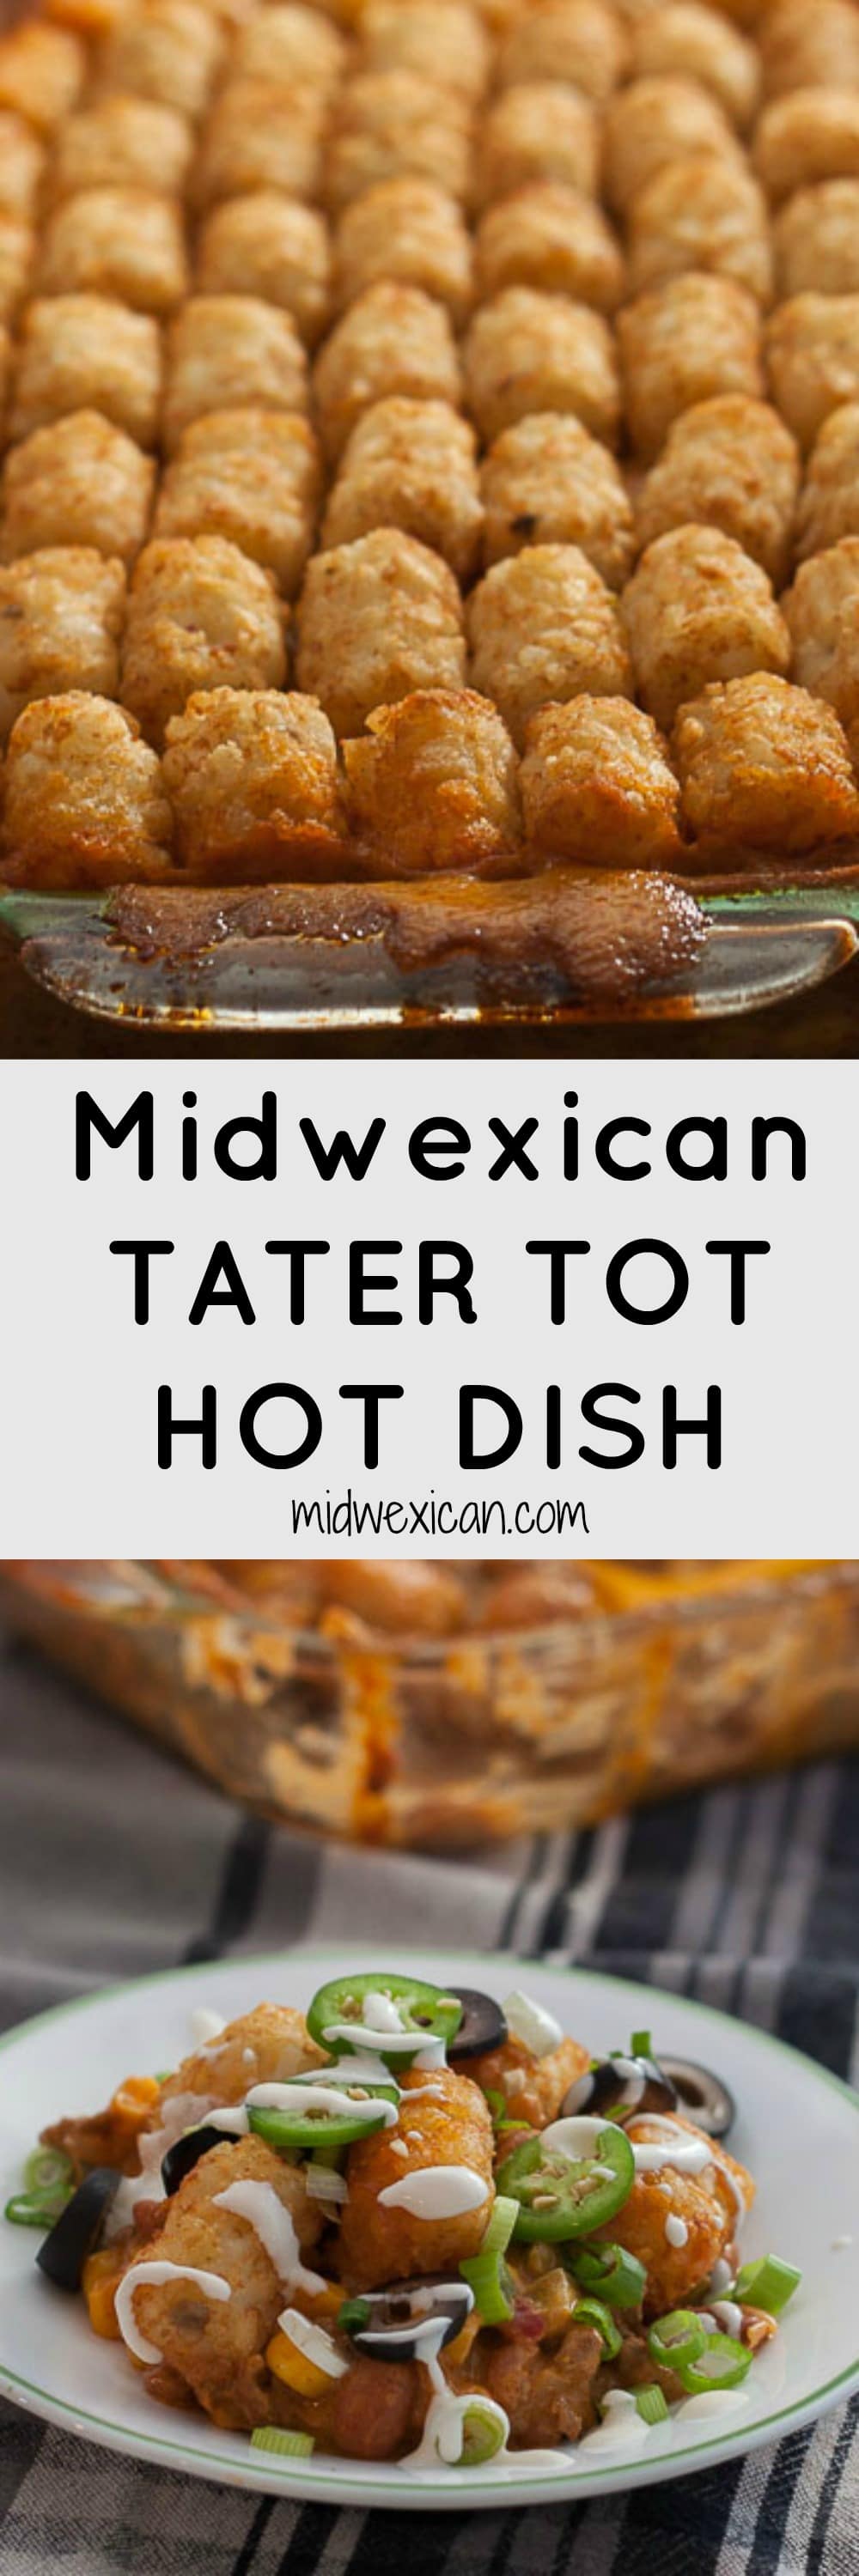 Tater tot hot dish, taco style!